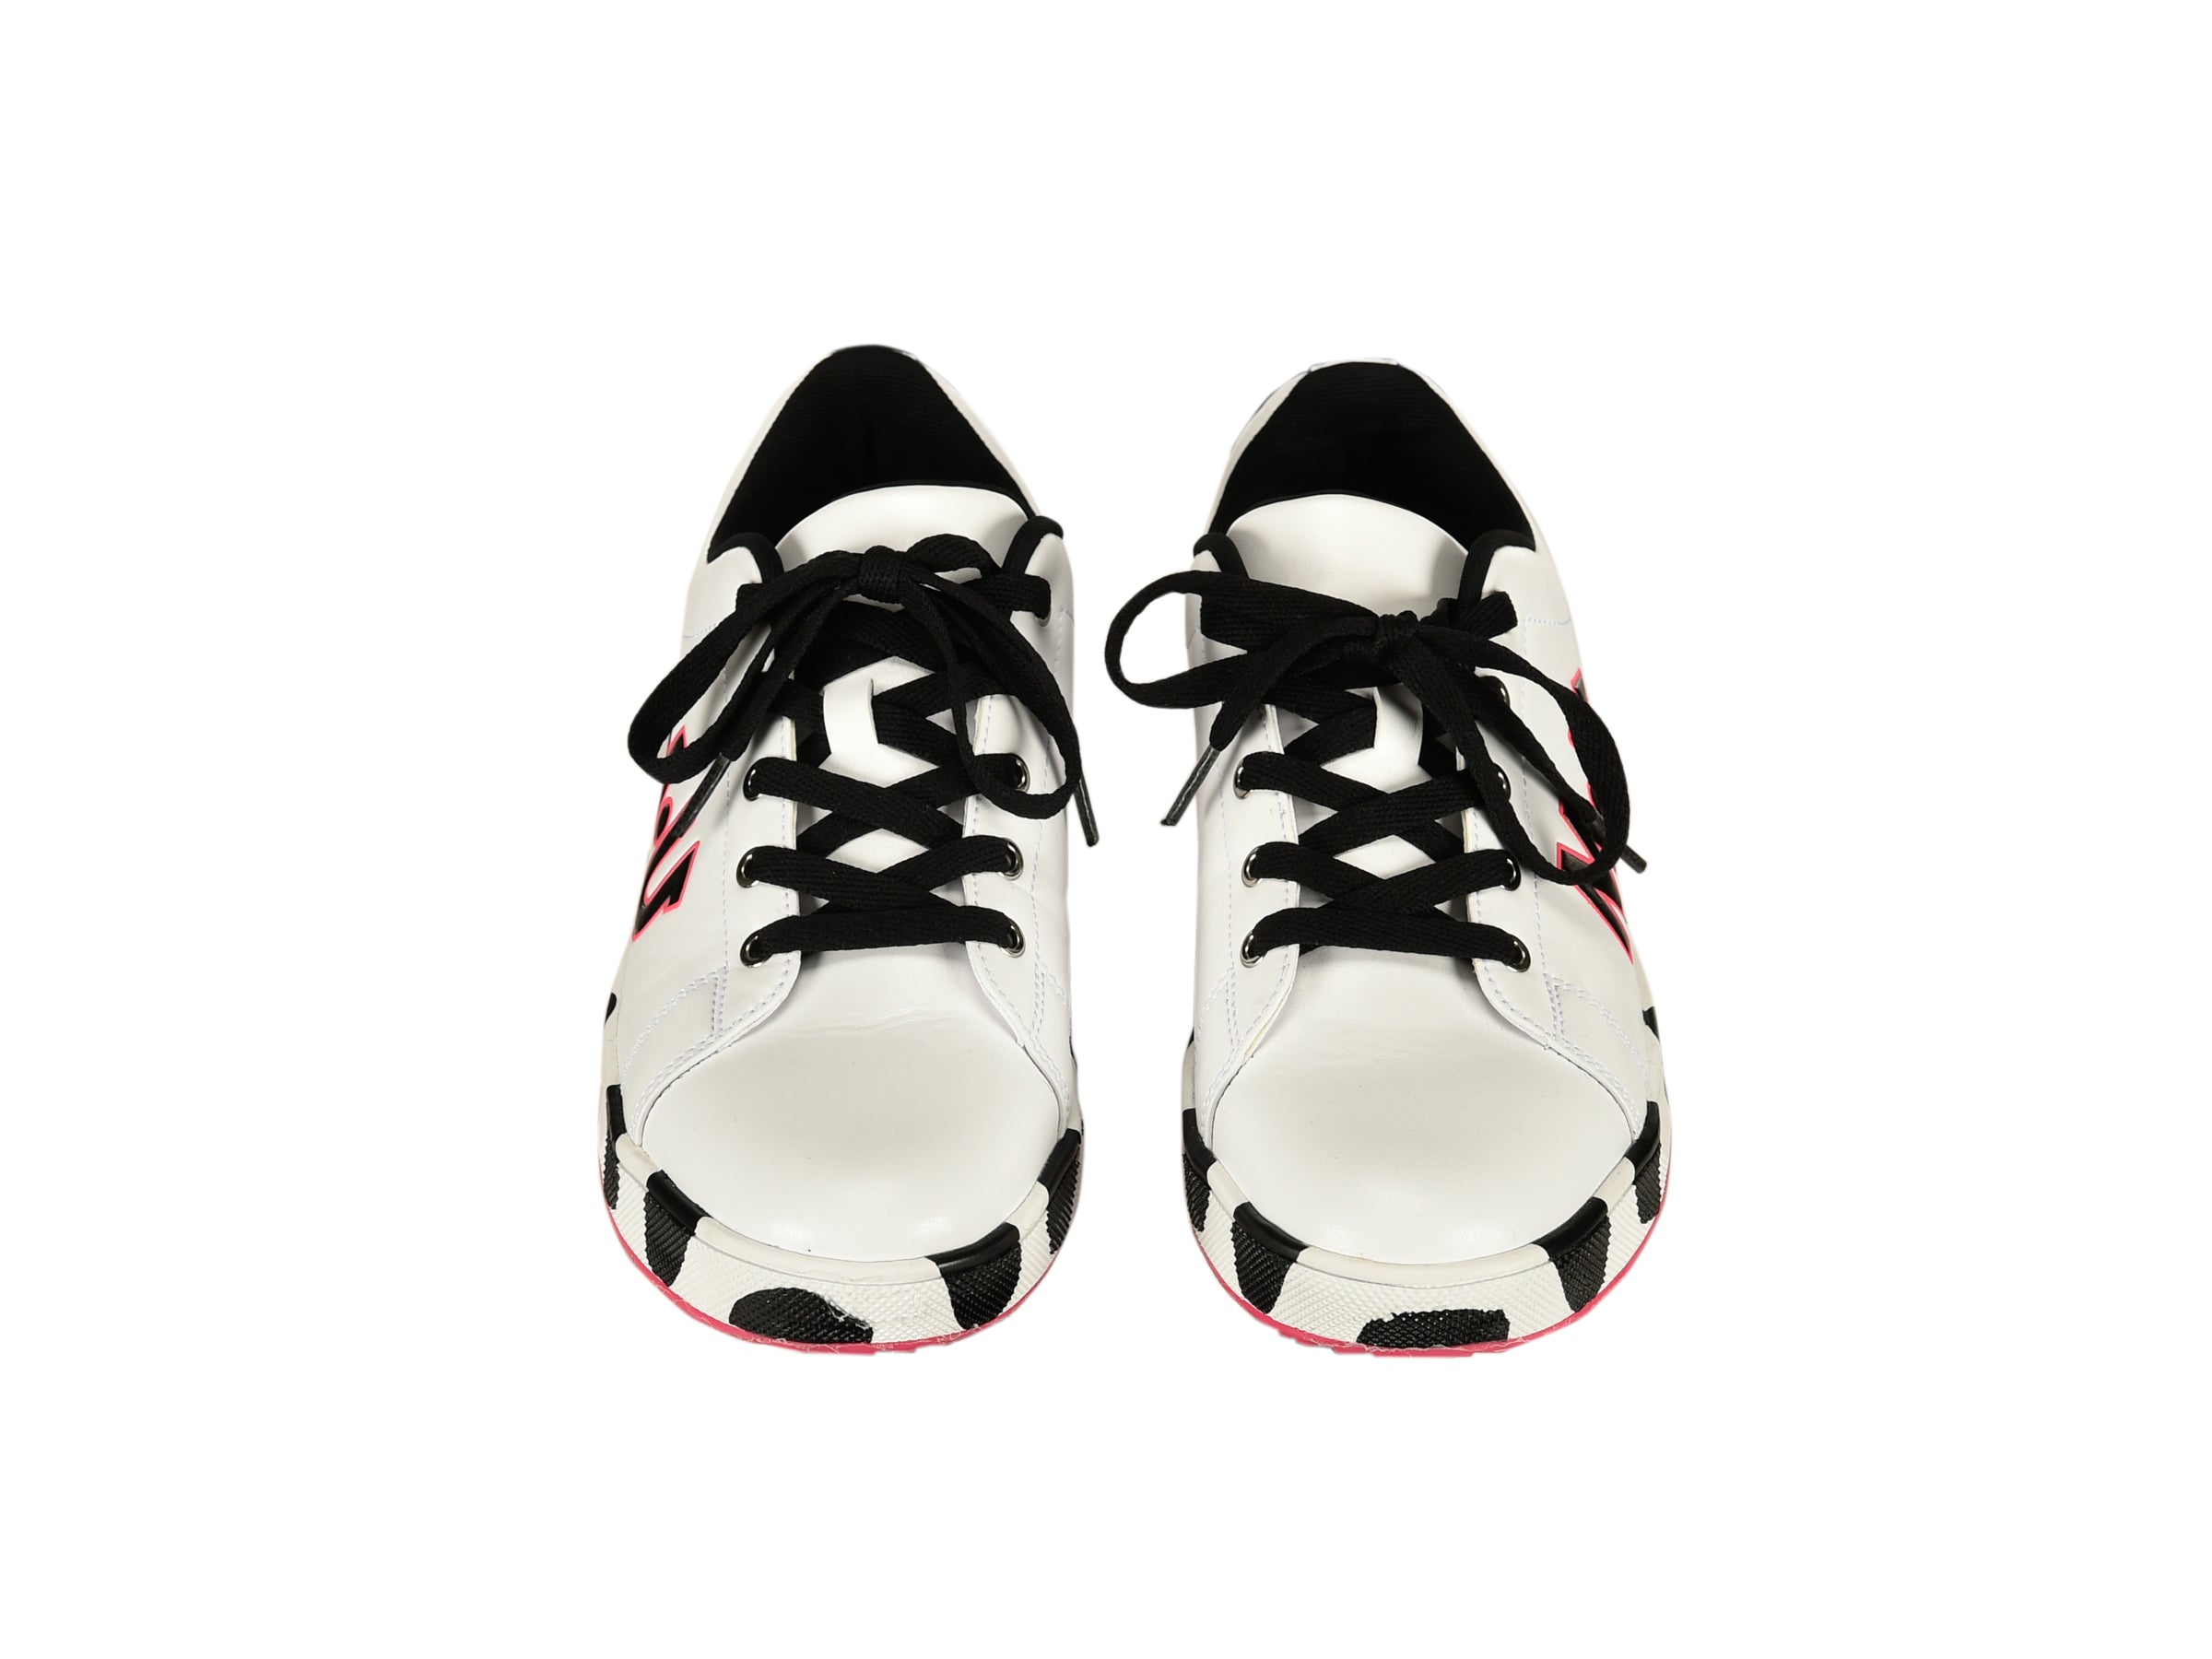 Dalmatian pattern spikeless shoes (703J6600)